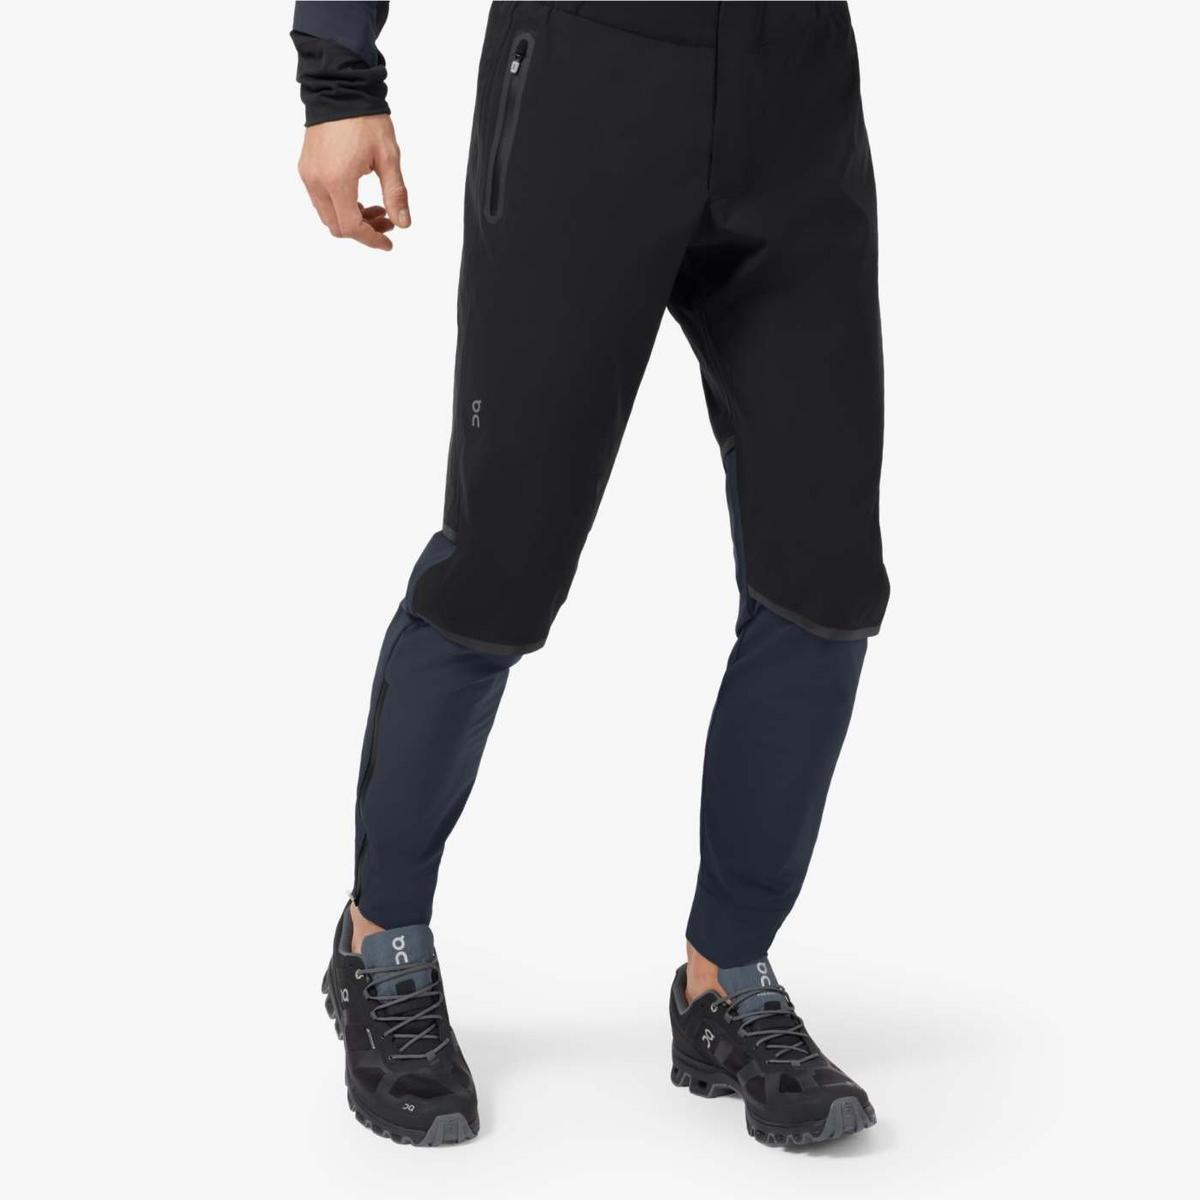 On - Men's Waterproof Pants - Black / Navy, Men's Running Clothing